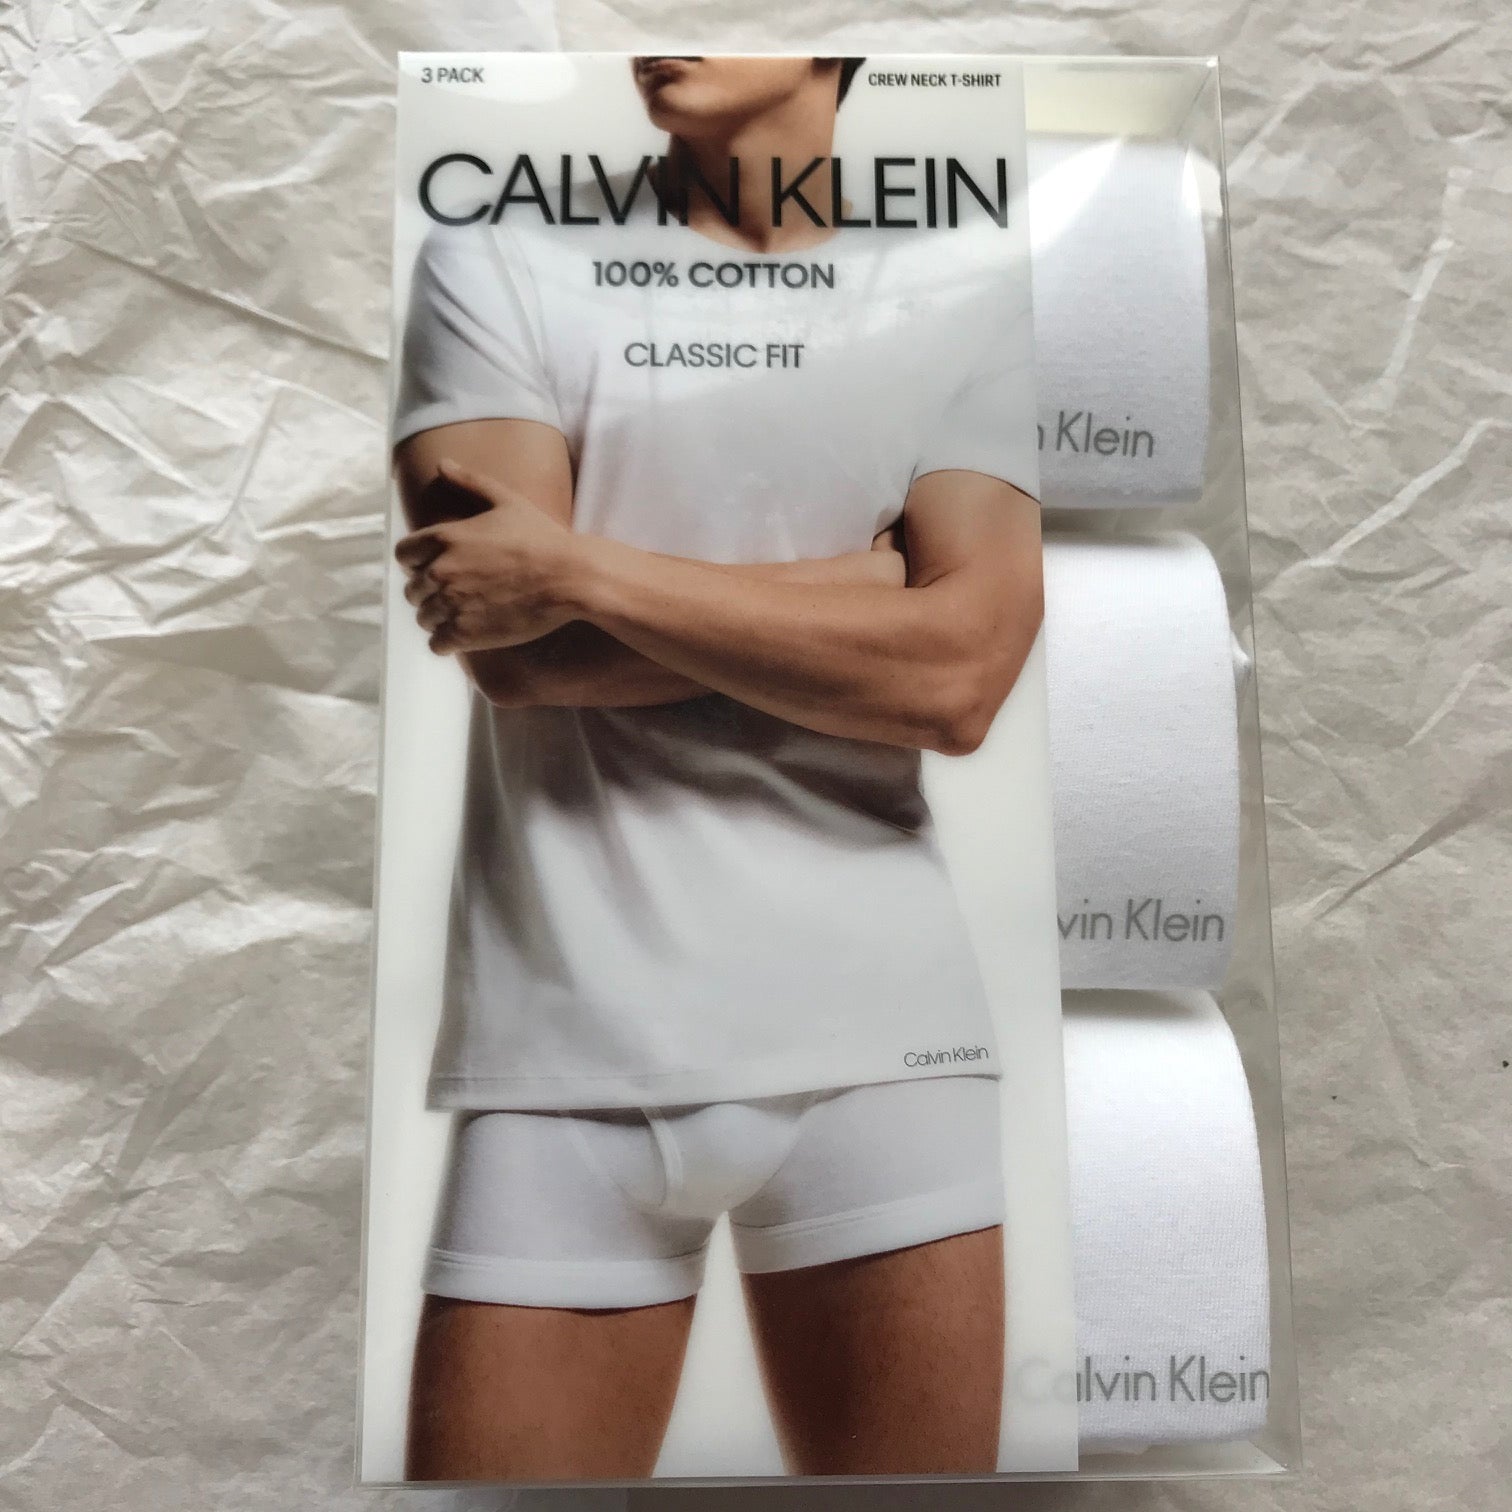 Men's Calvin Klein | Three Crew Neck T-Shirts | - F.L.